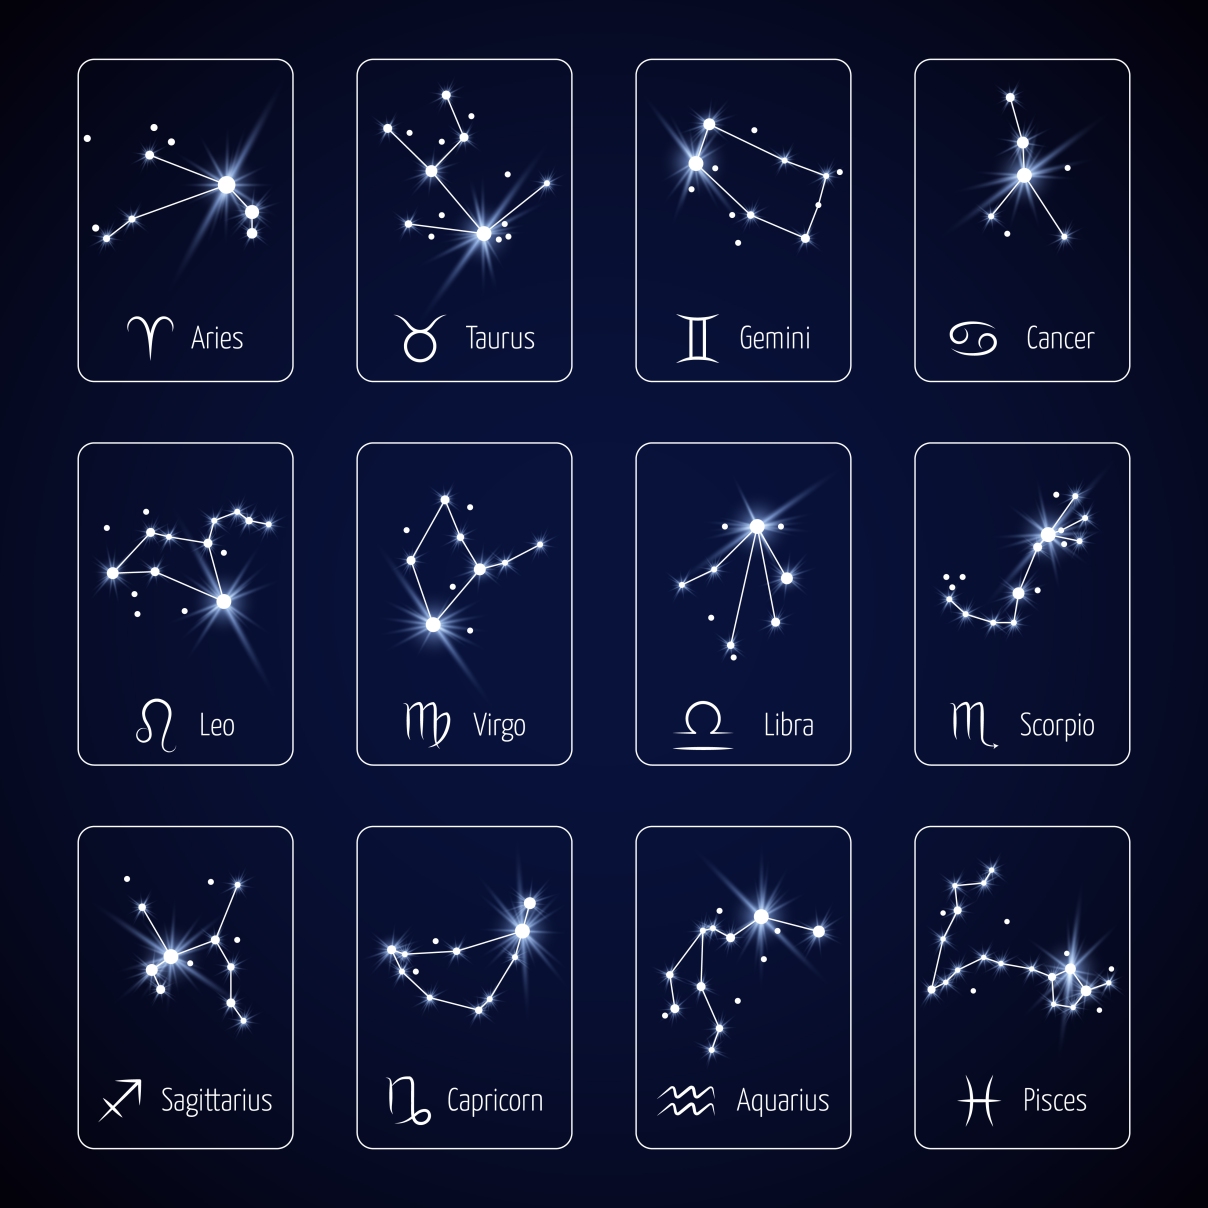 знаки зодиака созвездия картинки для детей